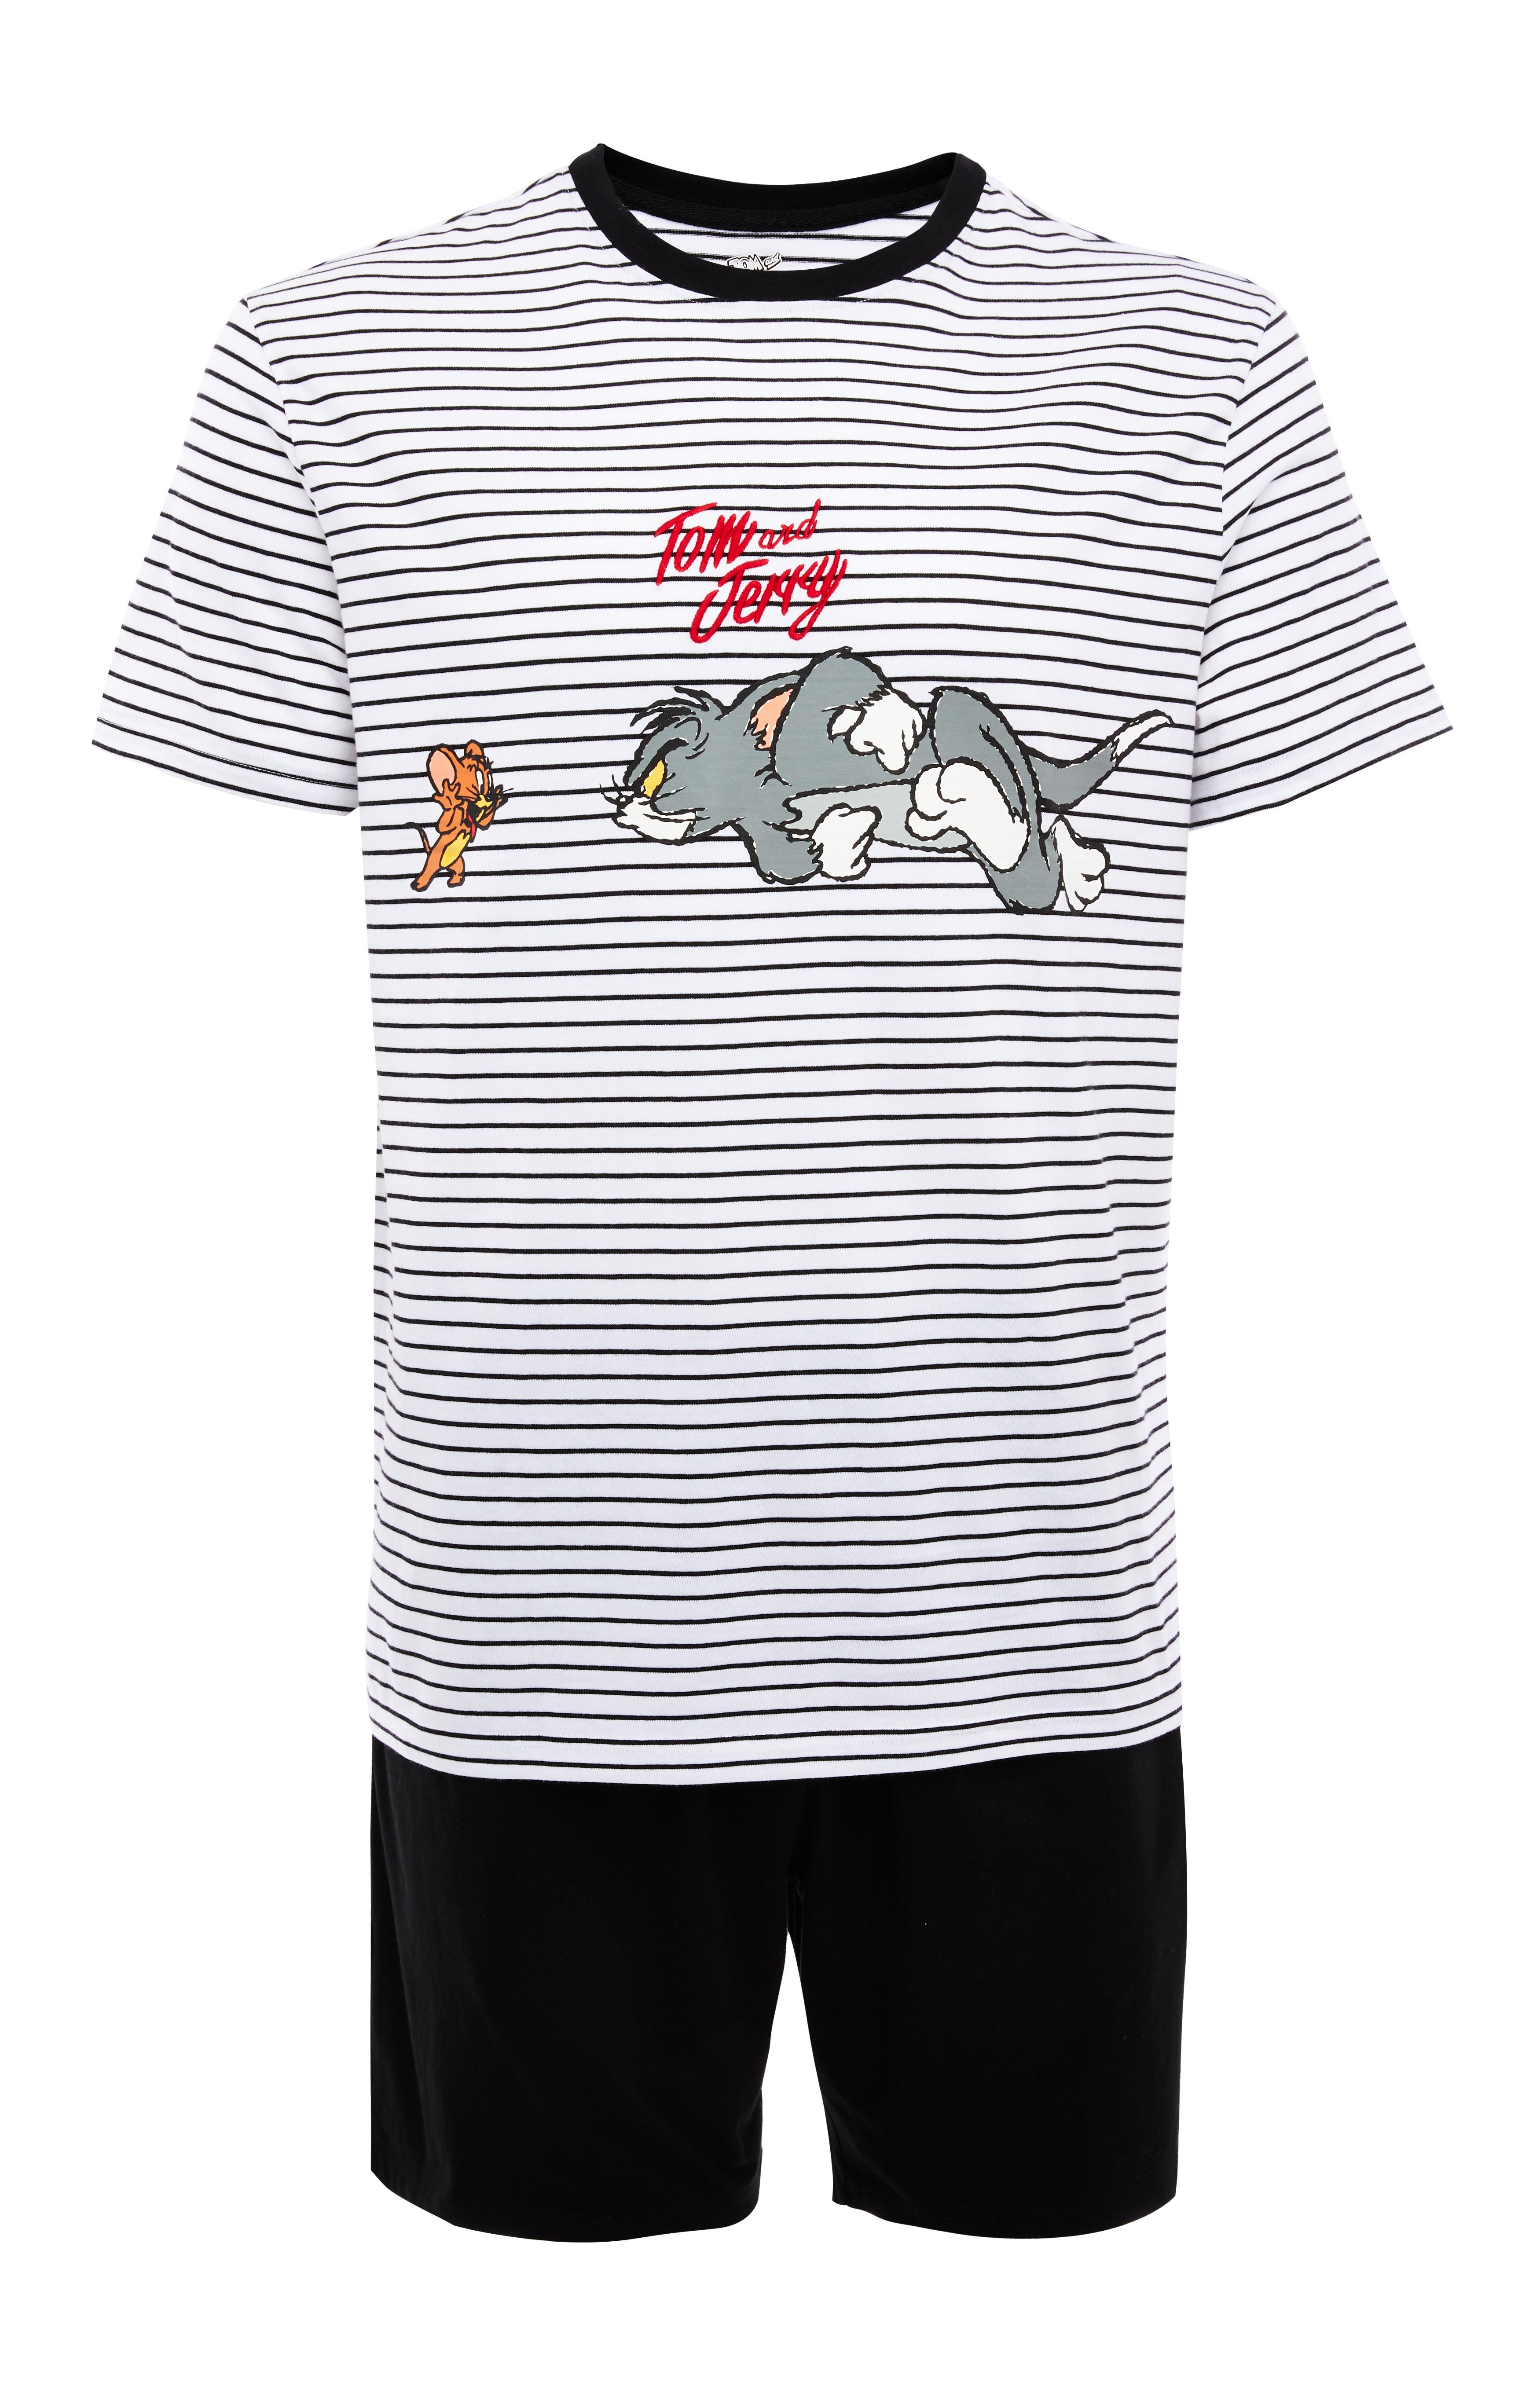 Monochrome Striped Tom And Jerry Short Pyjamas Set | Men's Pyjamas